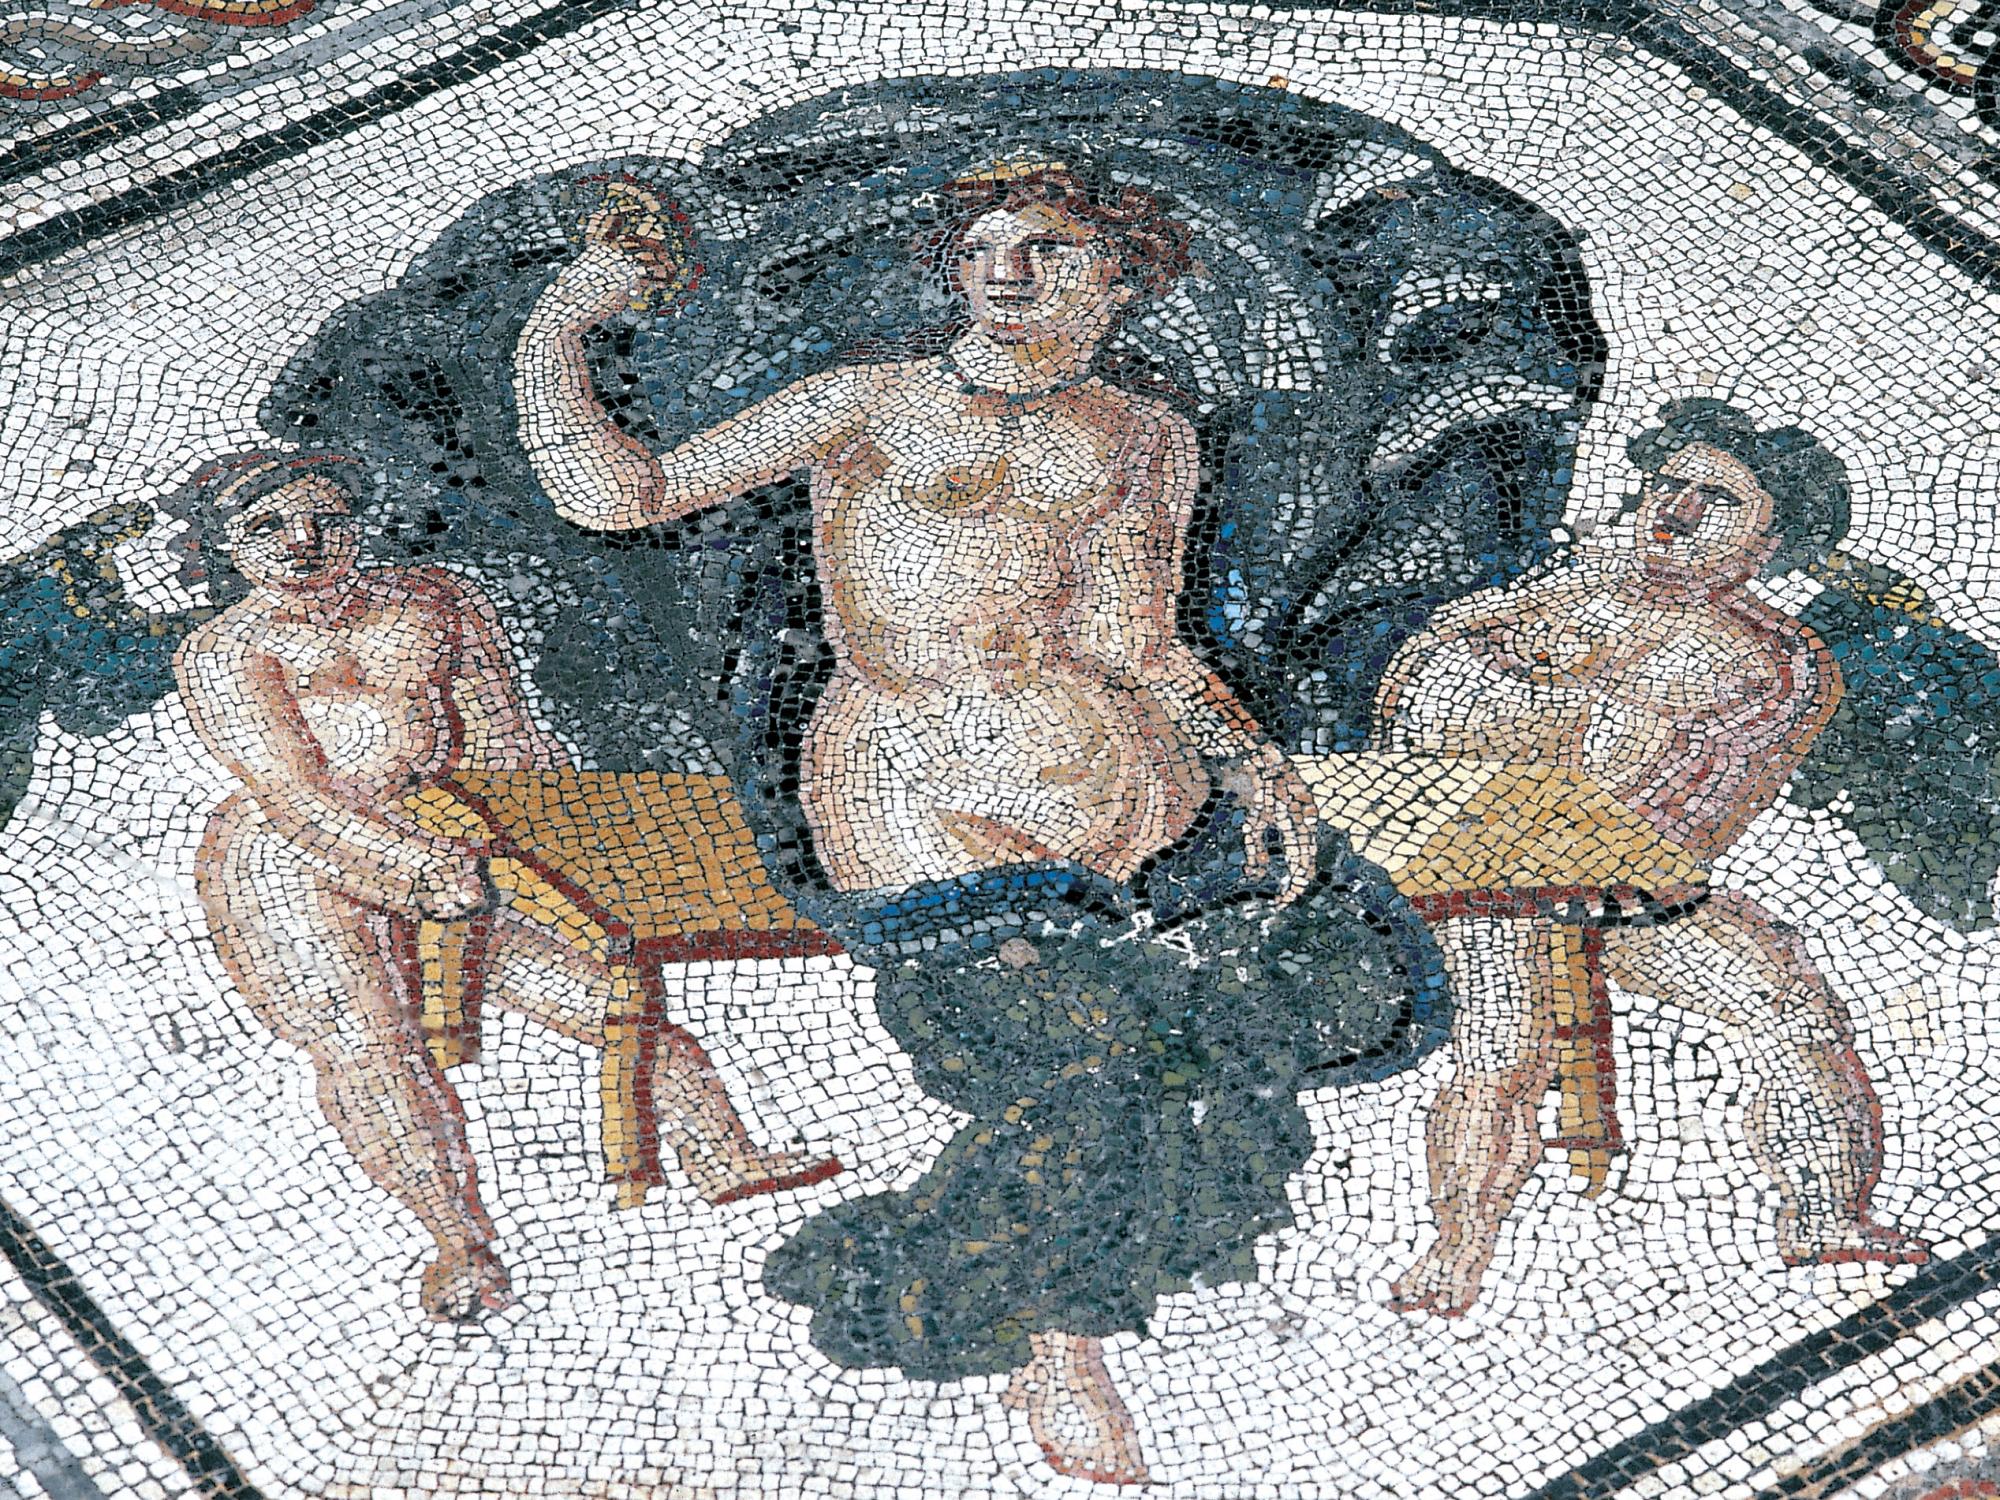 Orbe roman mosaics